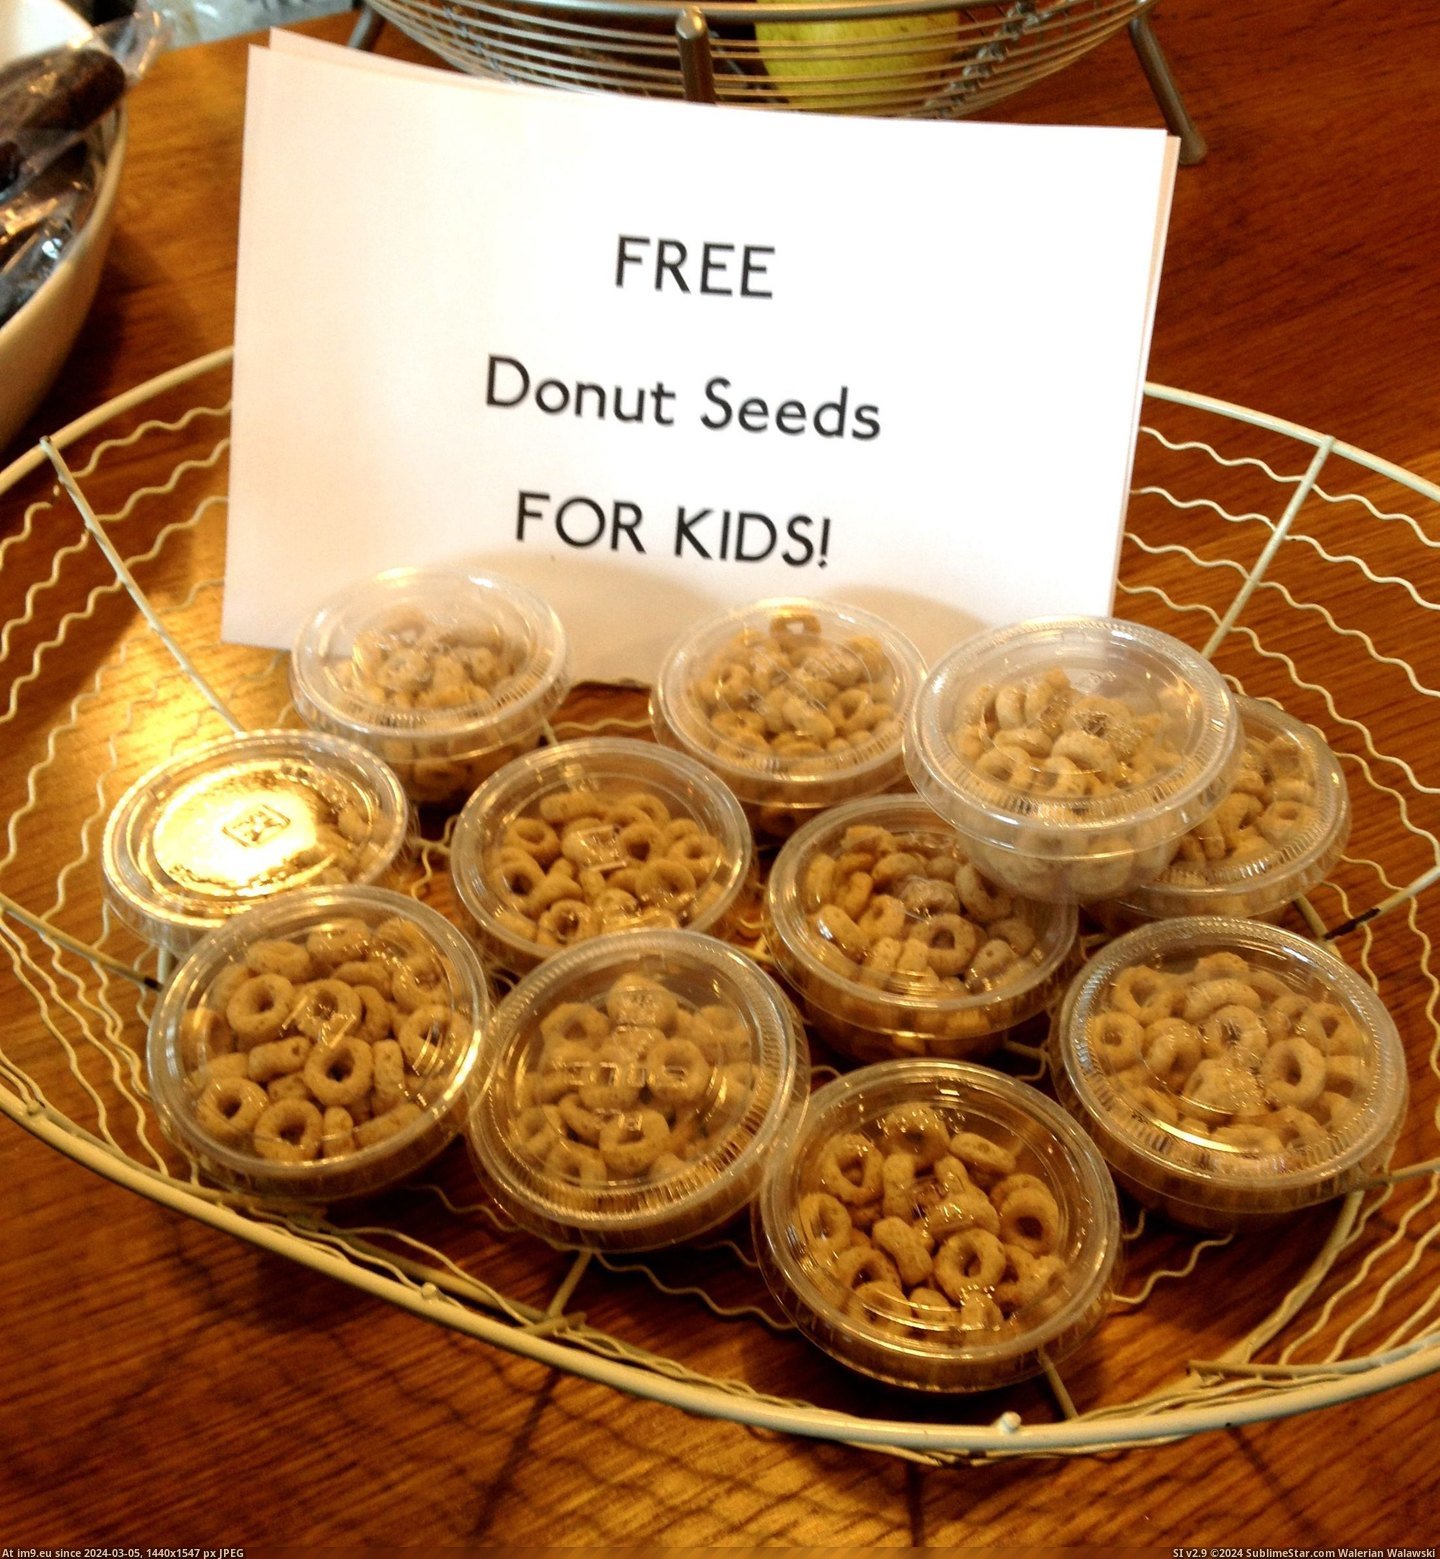 #Funny #Seeds #Donut #Free [Funny] Free Donut Seeds Pic. (Изображение из альбом My r/FUNNY favs))